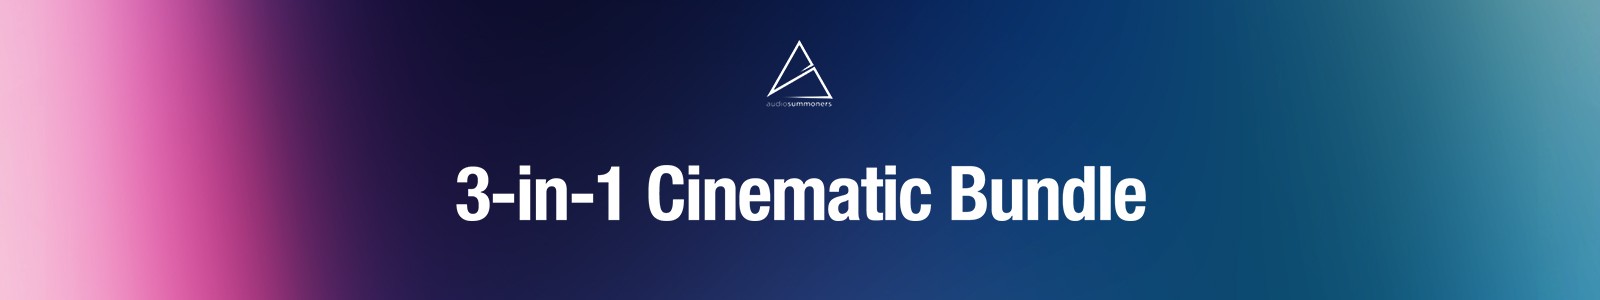 3-in-1 Cinematic Design Bundle by Audio Summoners